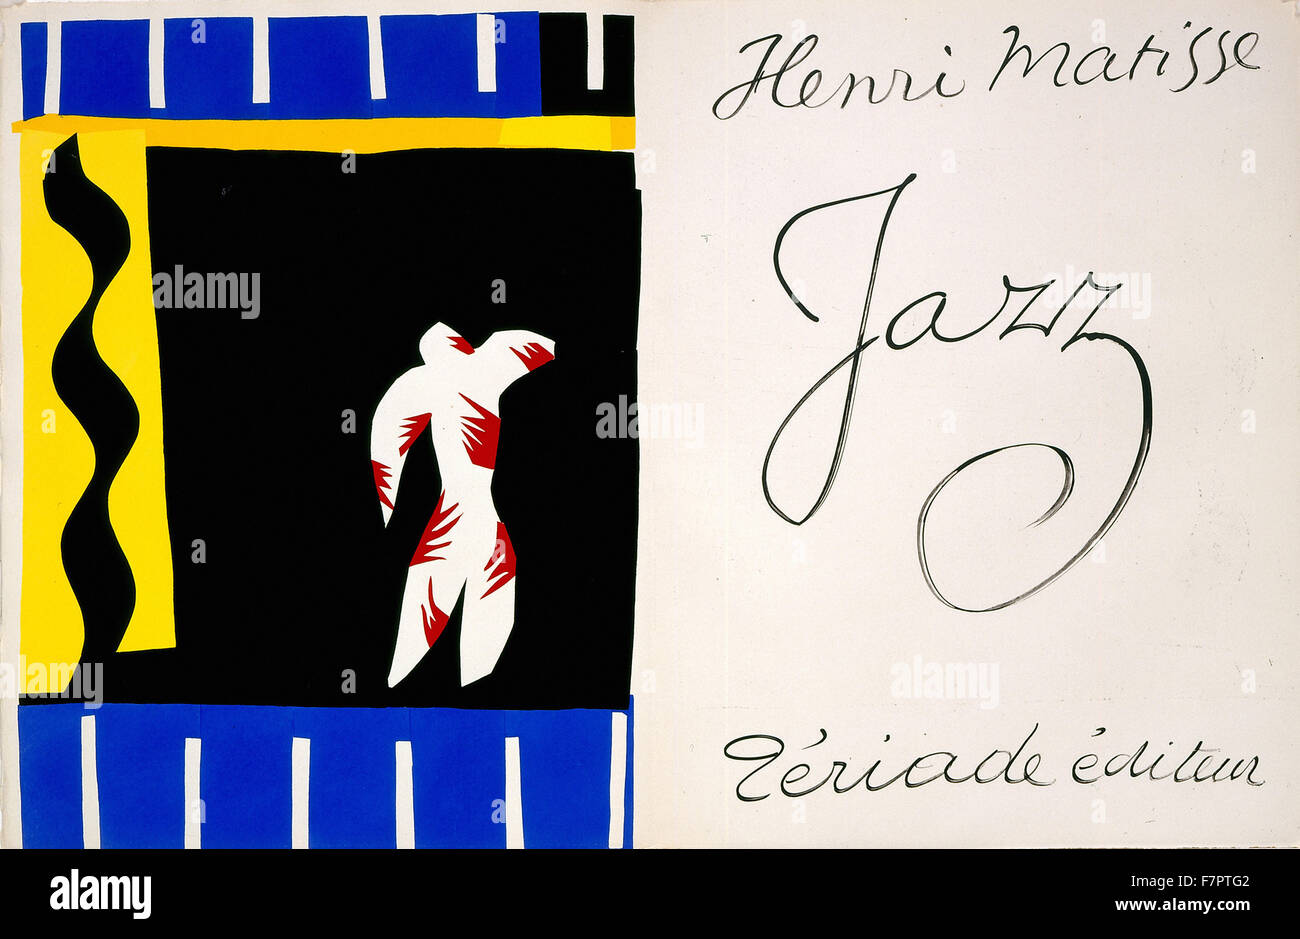 Henri Matisse - Jazz Stock Photo